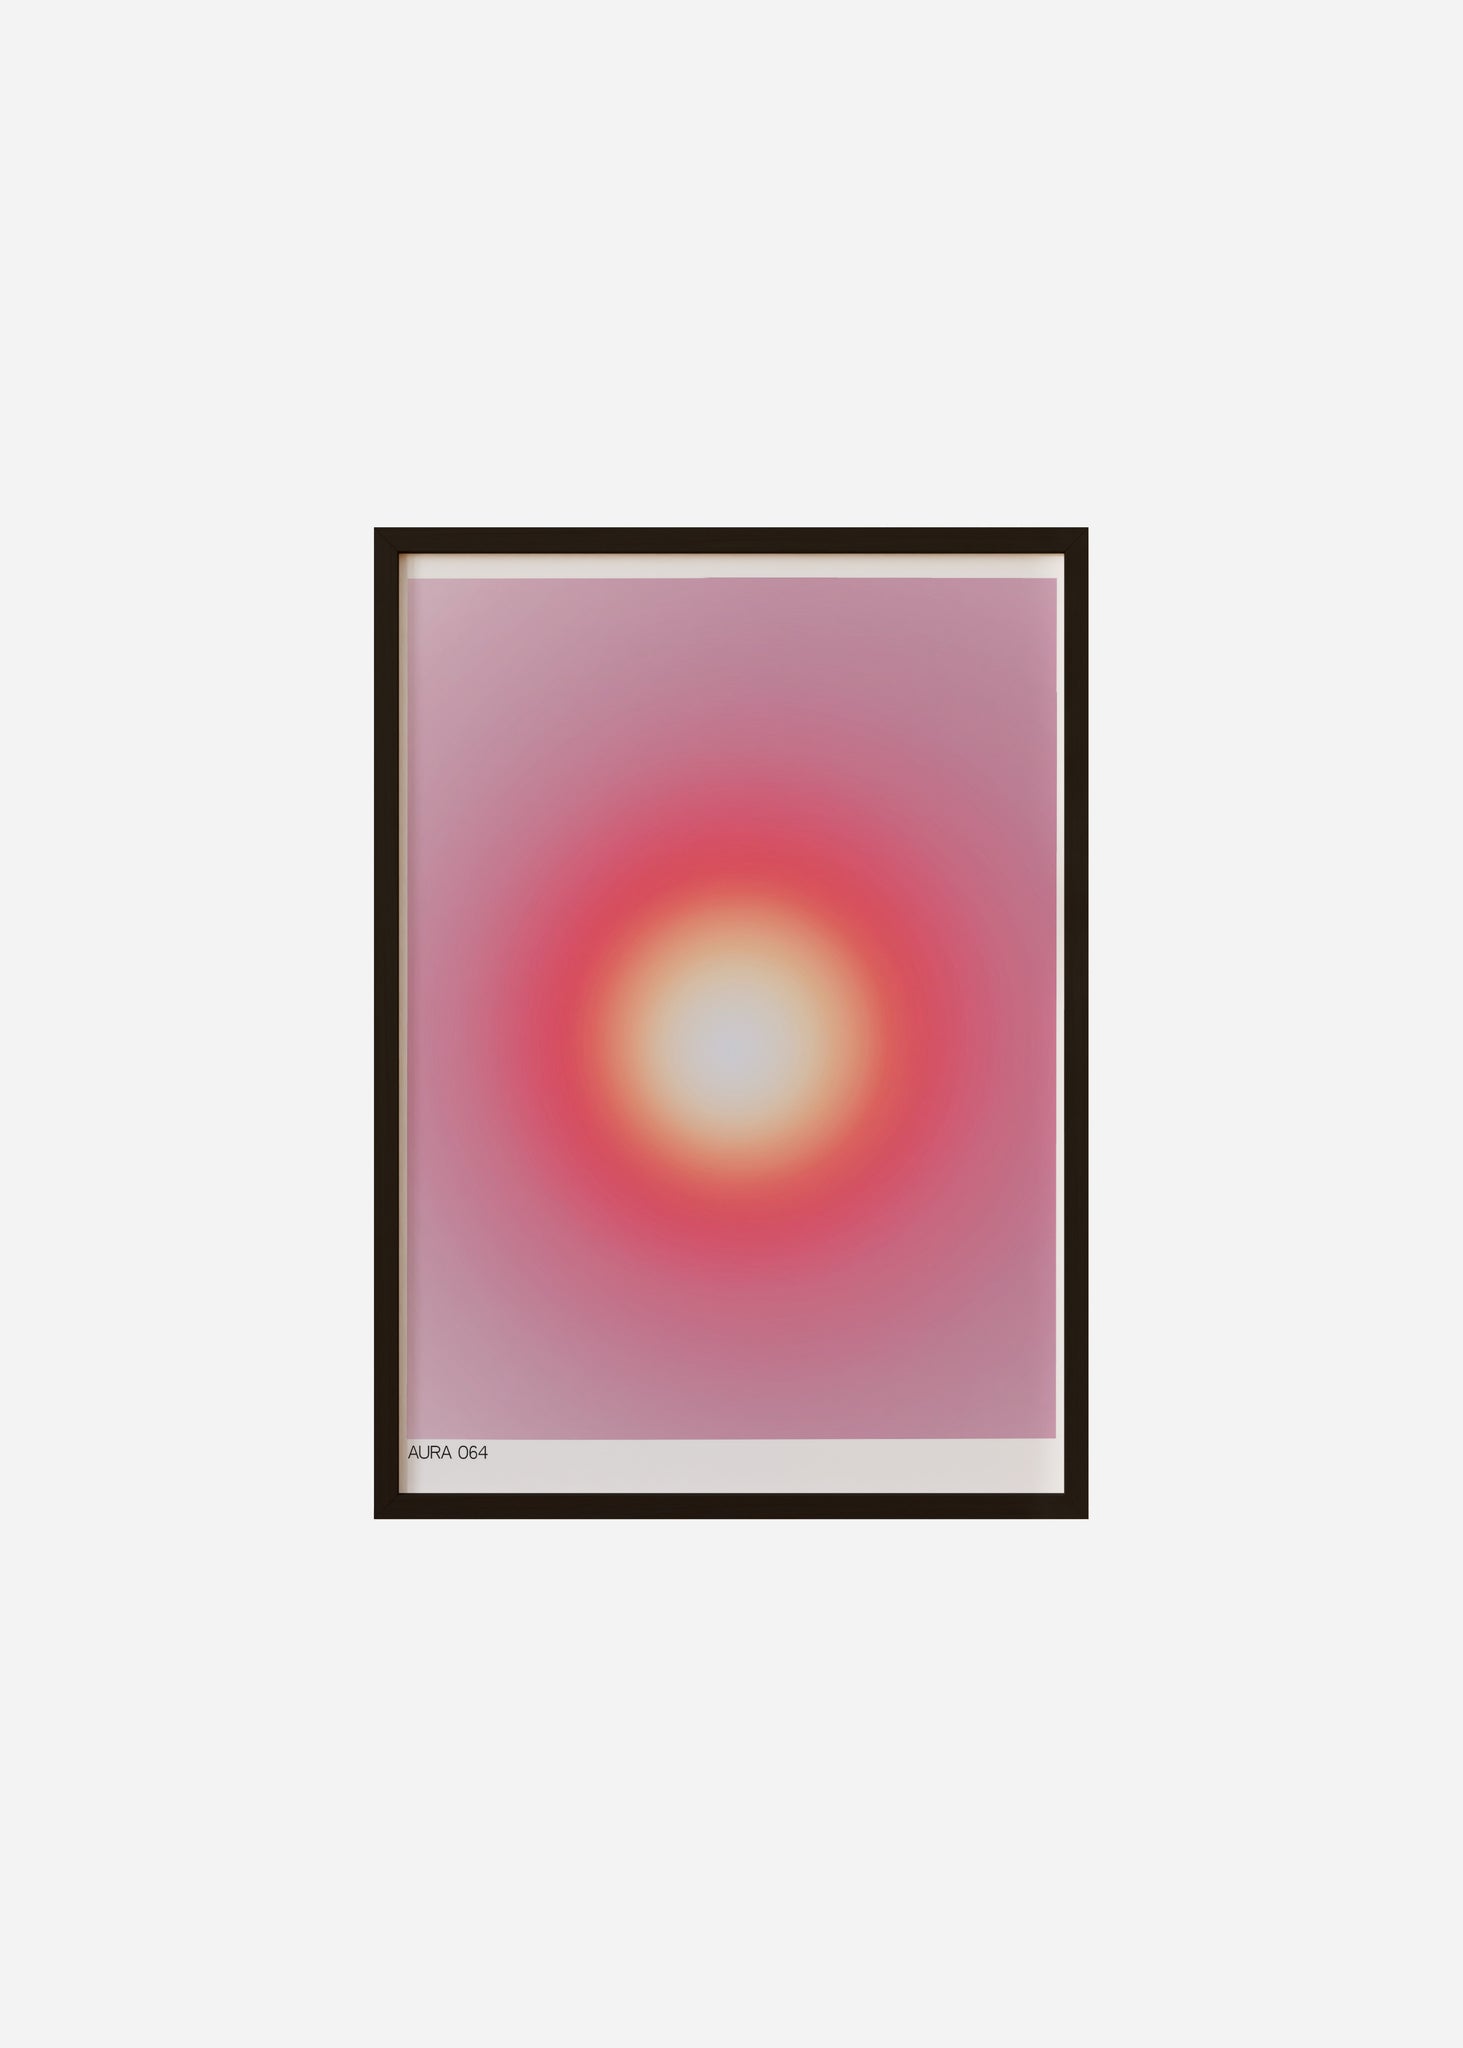 aura 064 Framed Print